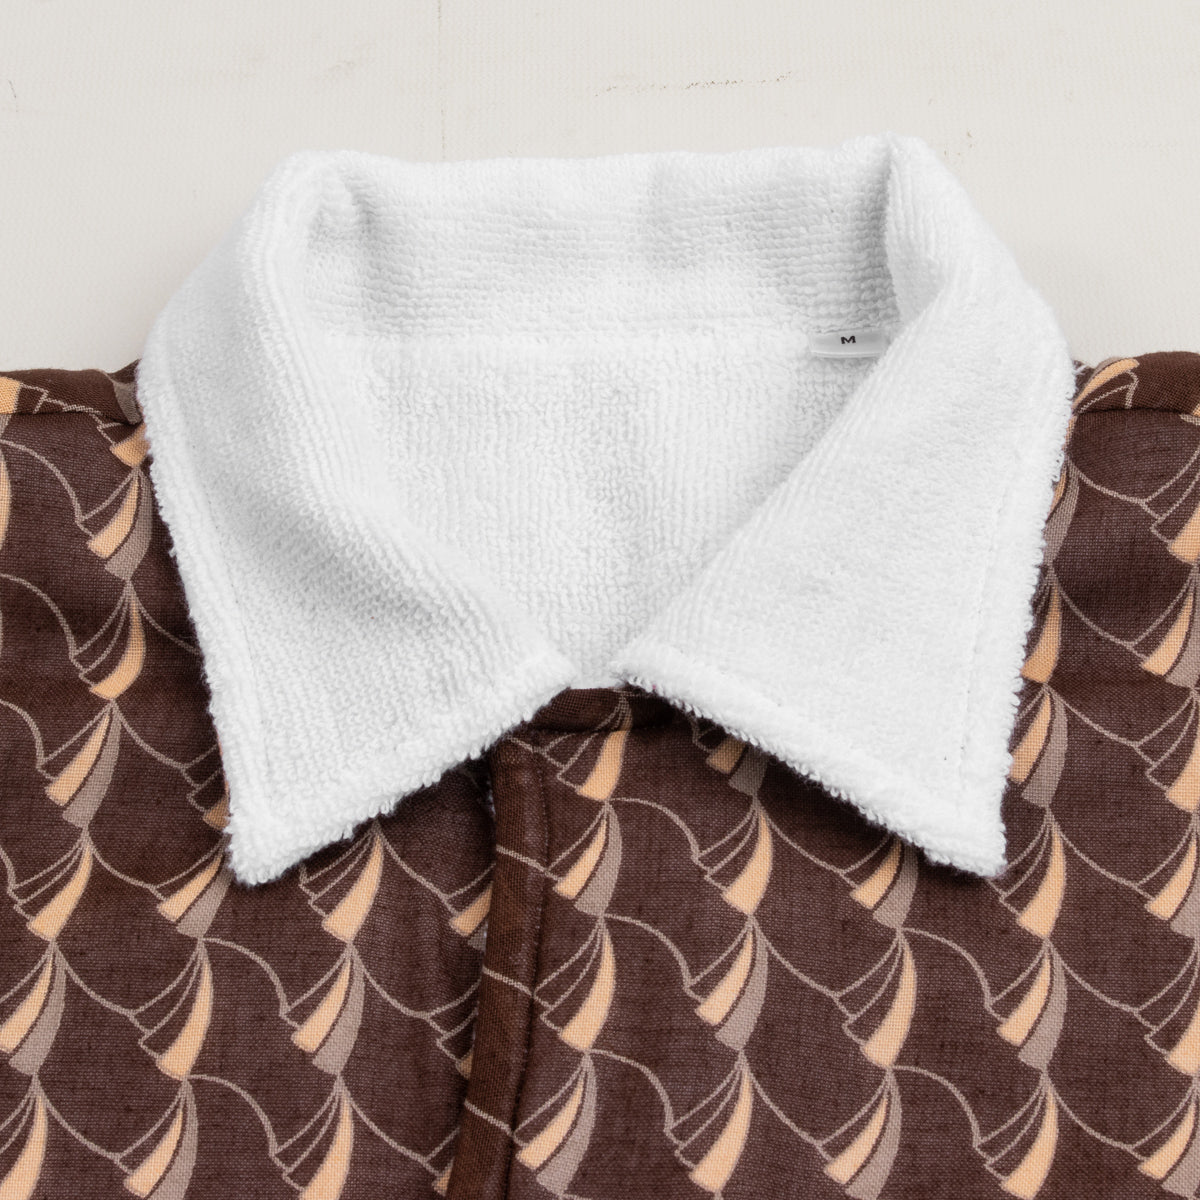 Bryceland's Co Towel Shirt